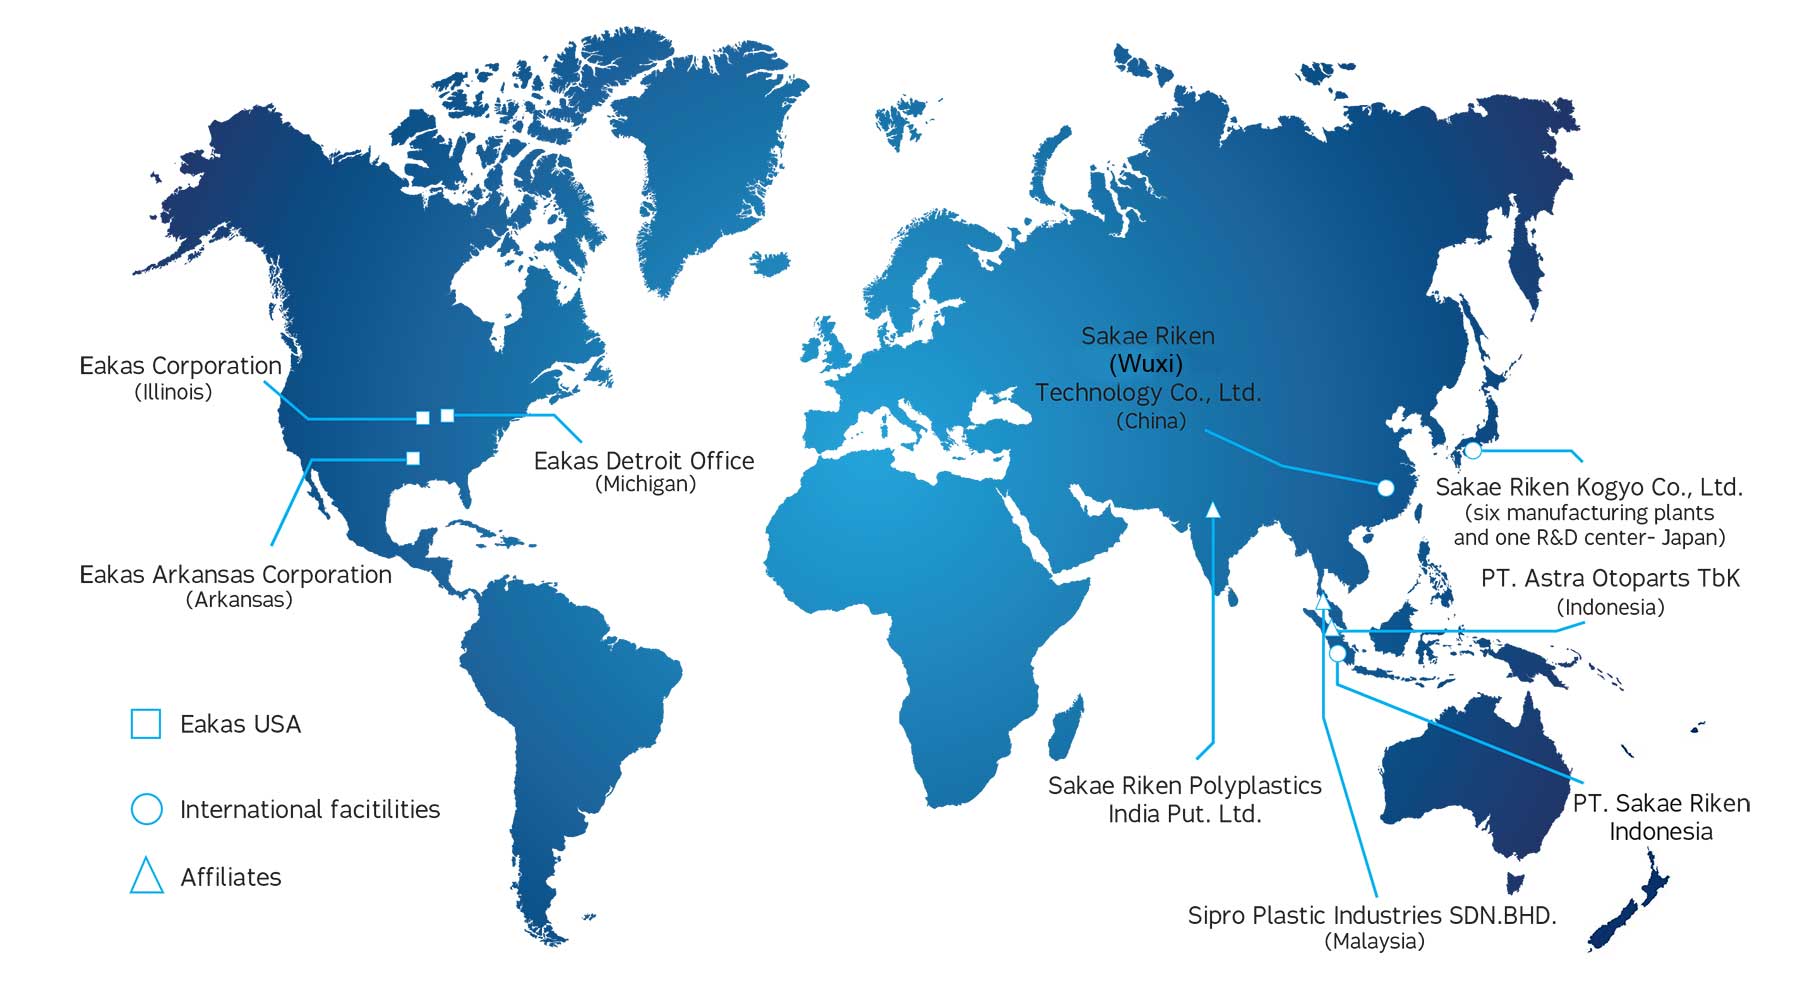 Eakas Corporation locations worldwide